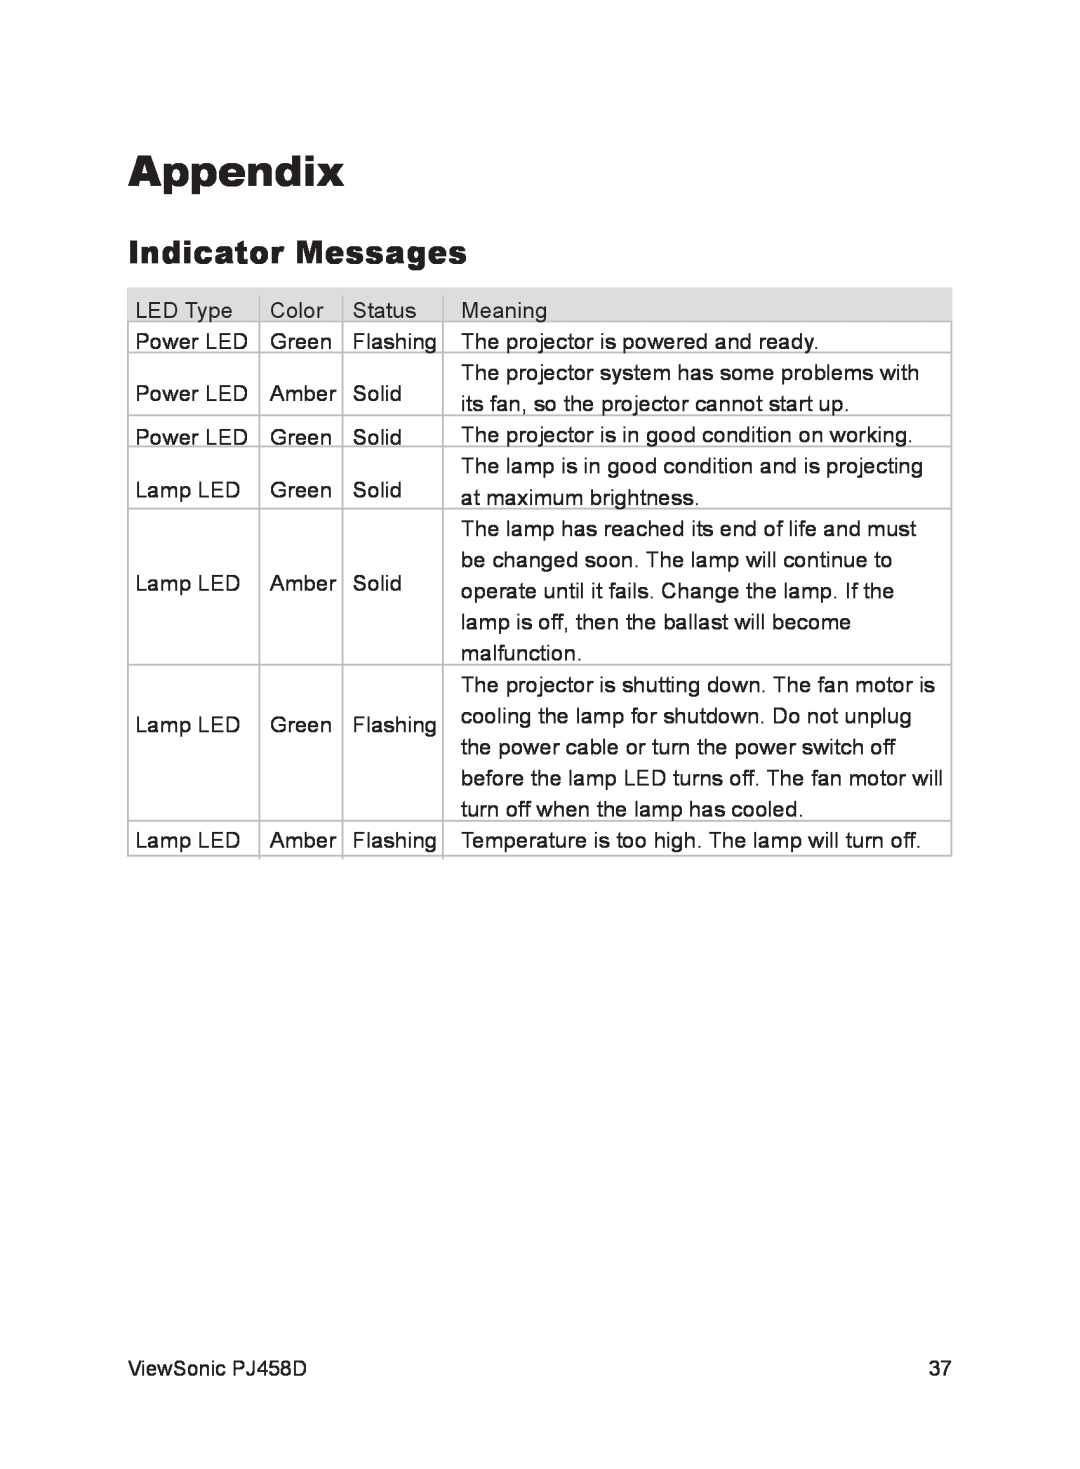 ViewSonic VS10872 manual Appendix, Indicator Messages 